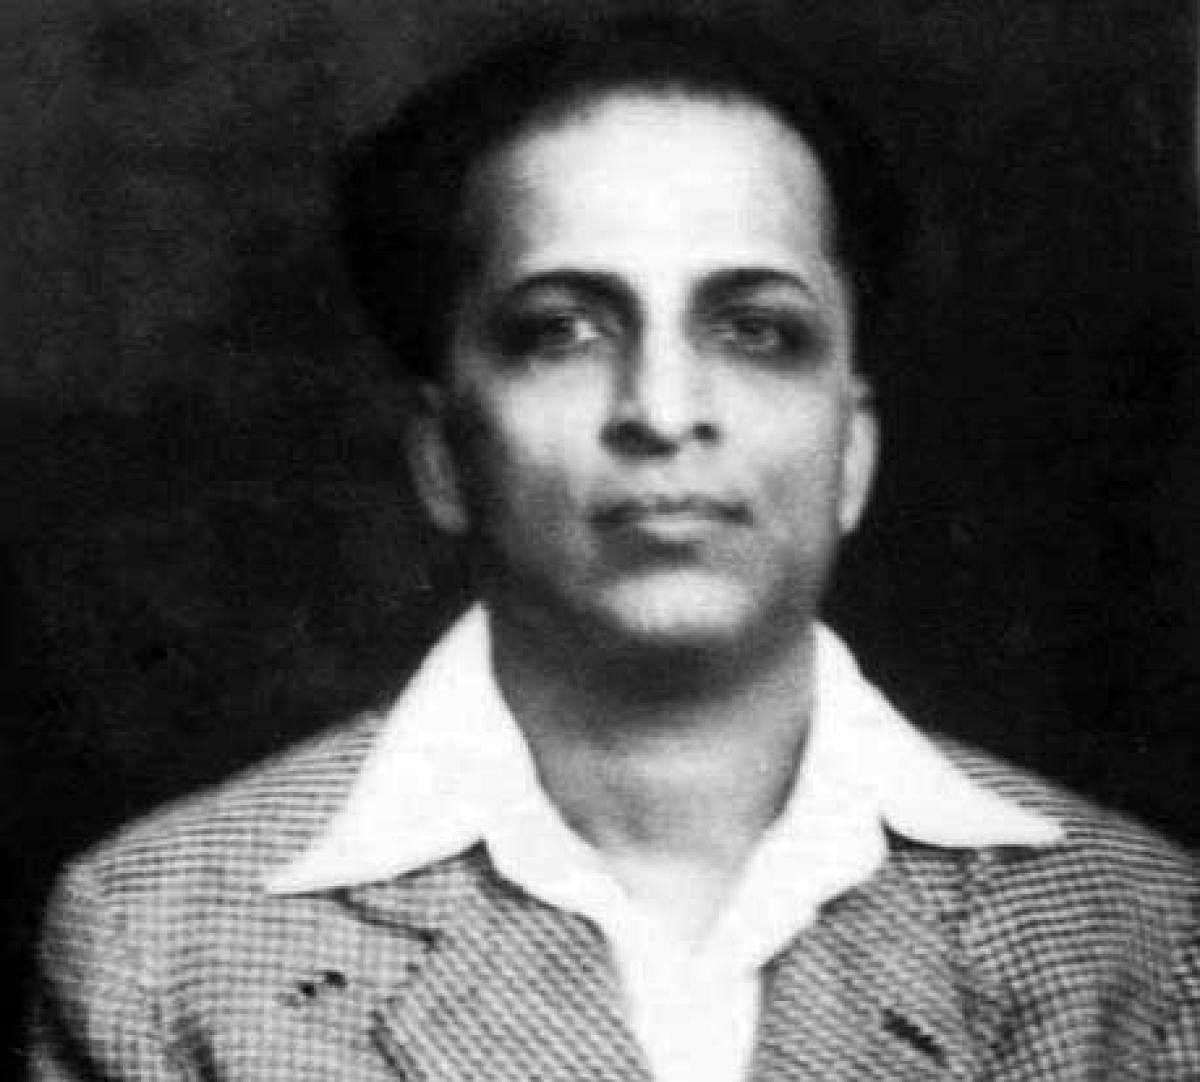 Narayan Dattatraya Apte was hanged for the murder of Mahatma Gandhi along with the main assassin, Nathuram Godse, on November 15, 1949. File photo